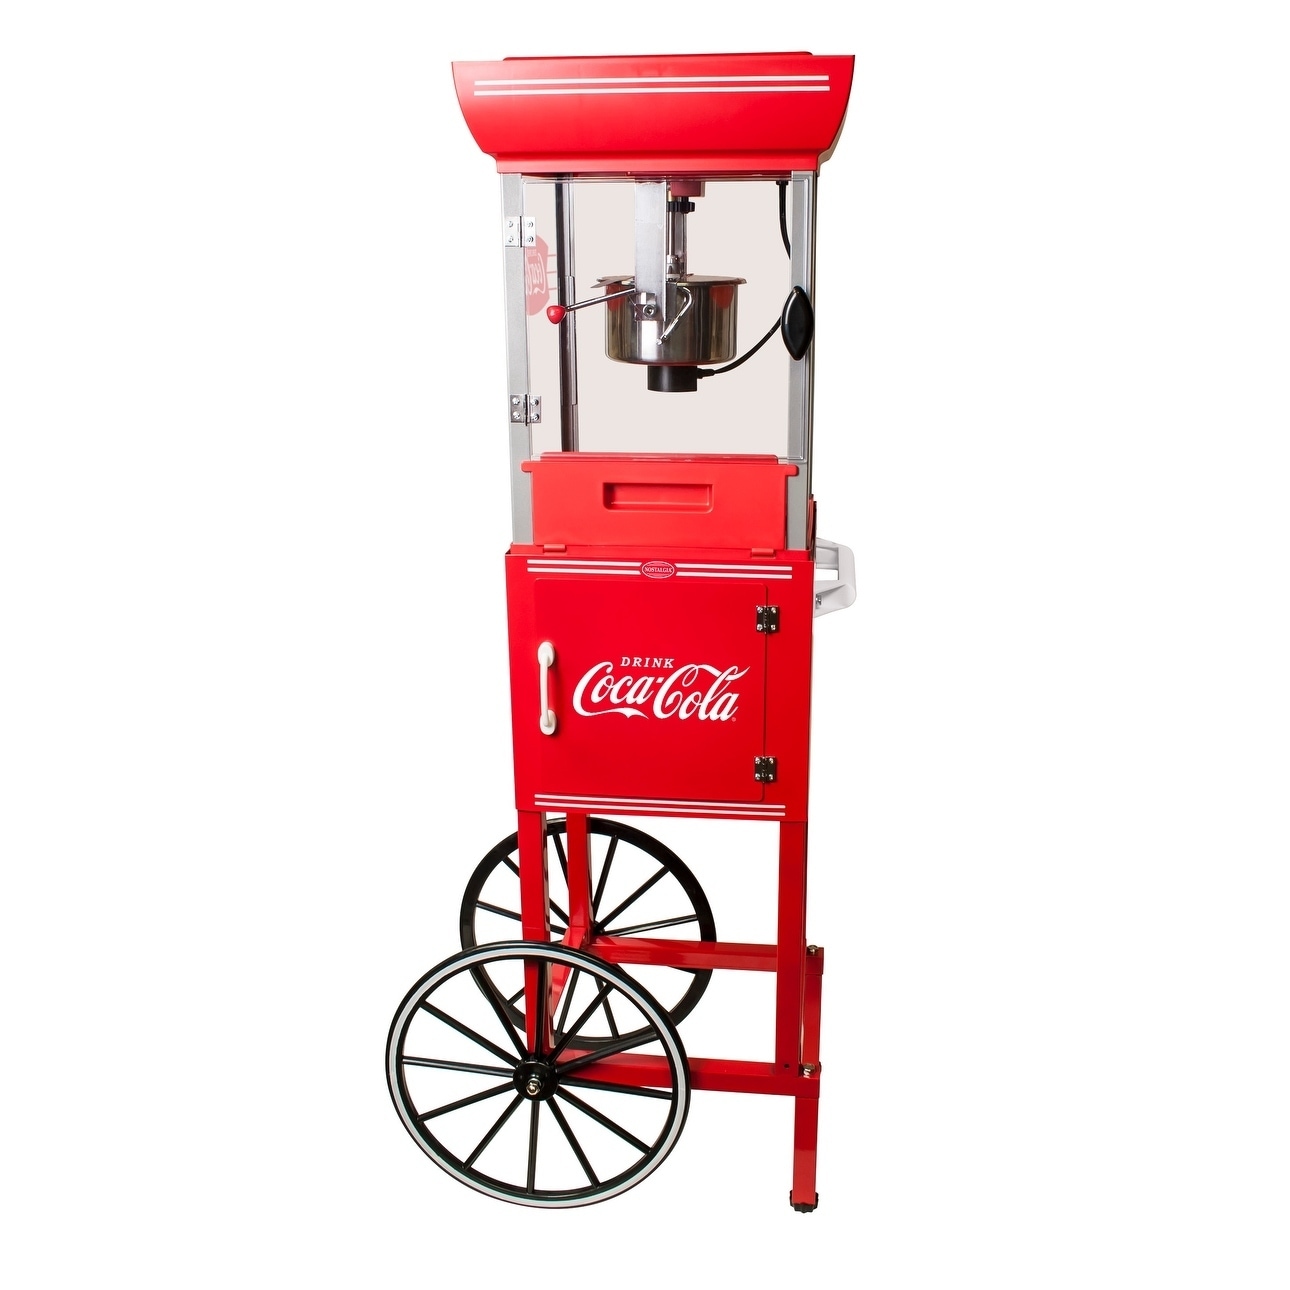 ov) Coca-Cola Popcorn Machine Cart 48 T new never used - McSherry Auction  Service Ltd.